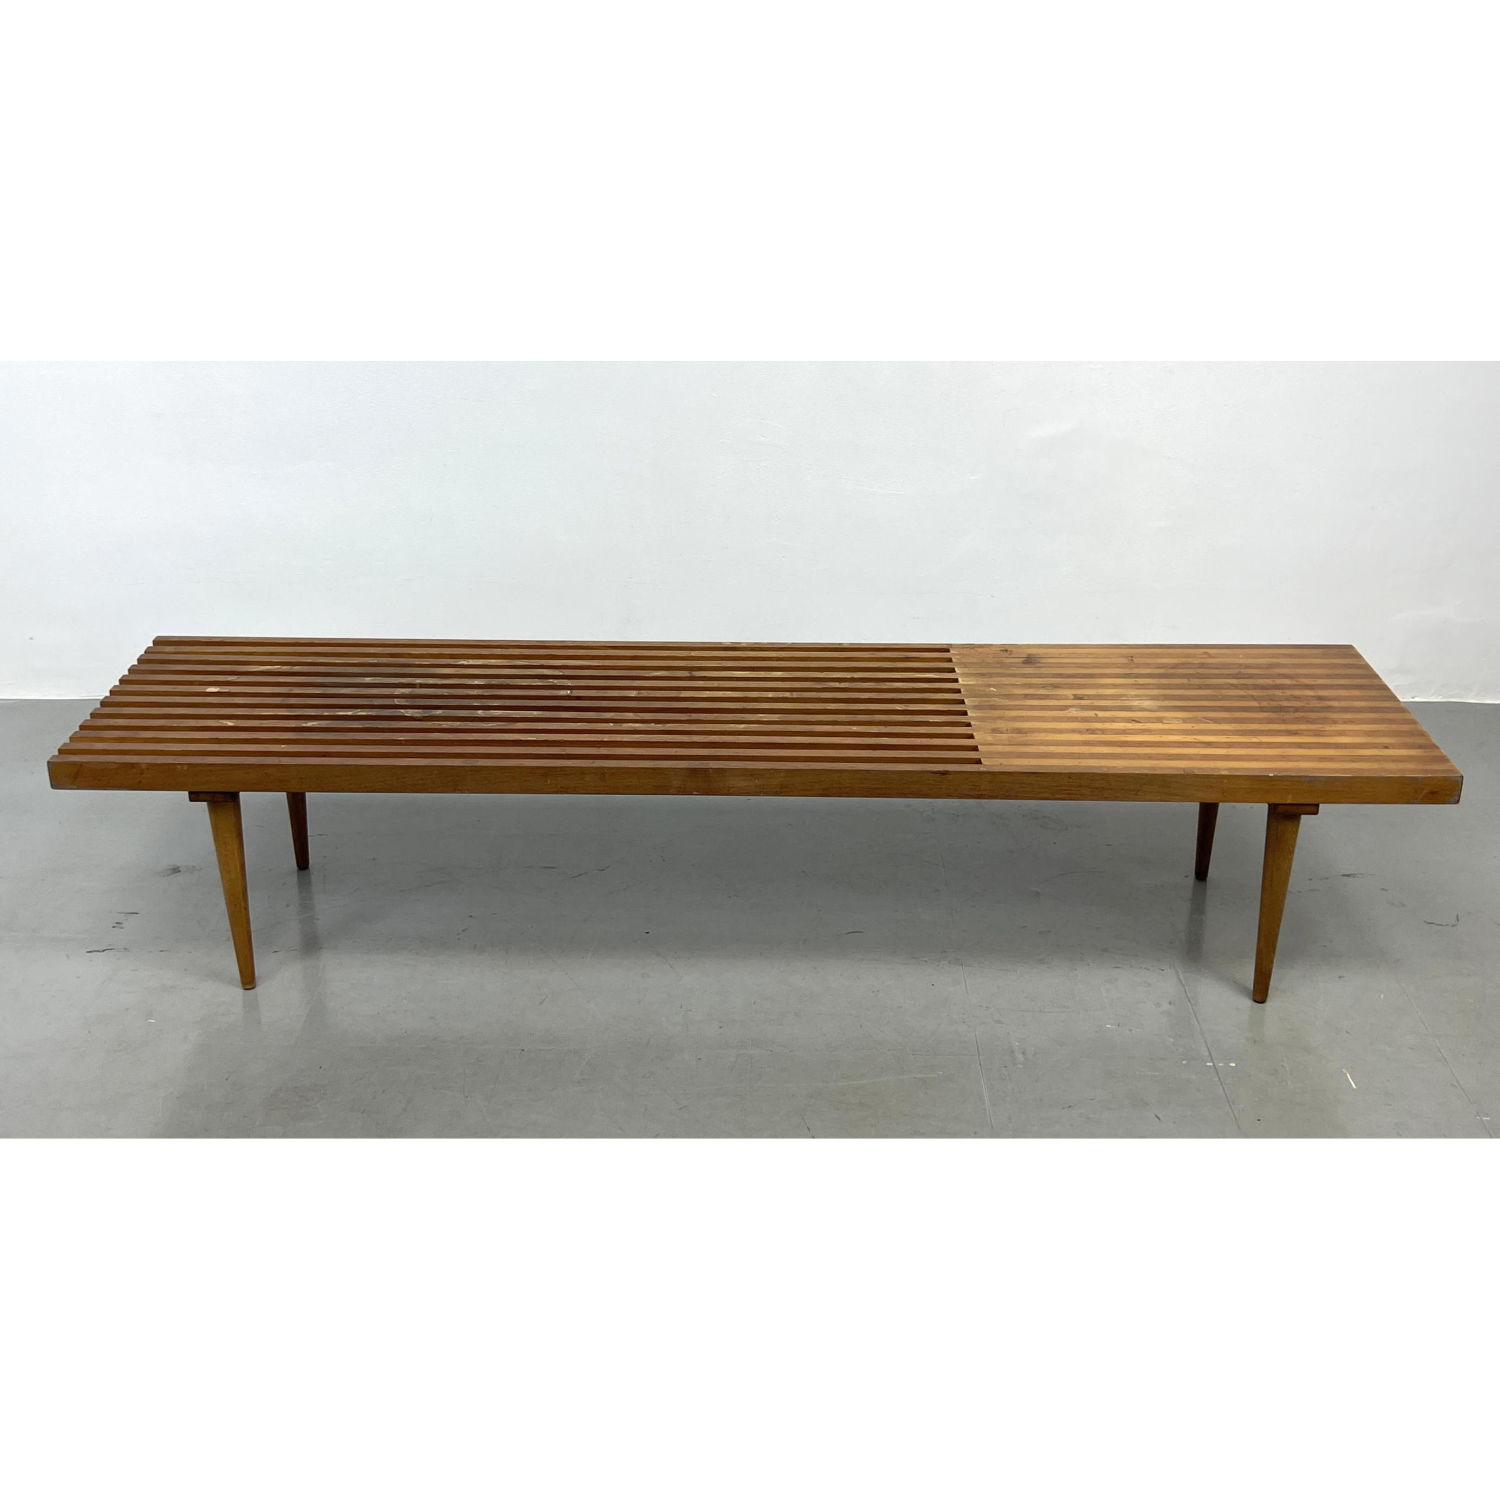 Vintage Modernist Slat Bench Partial 2b907b